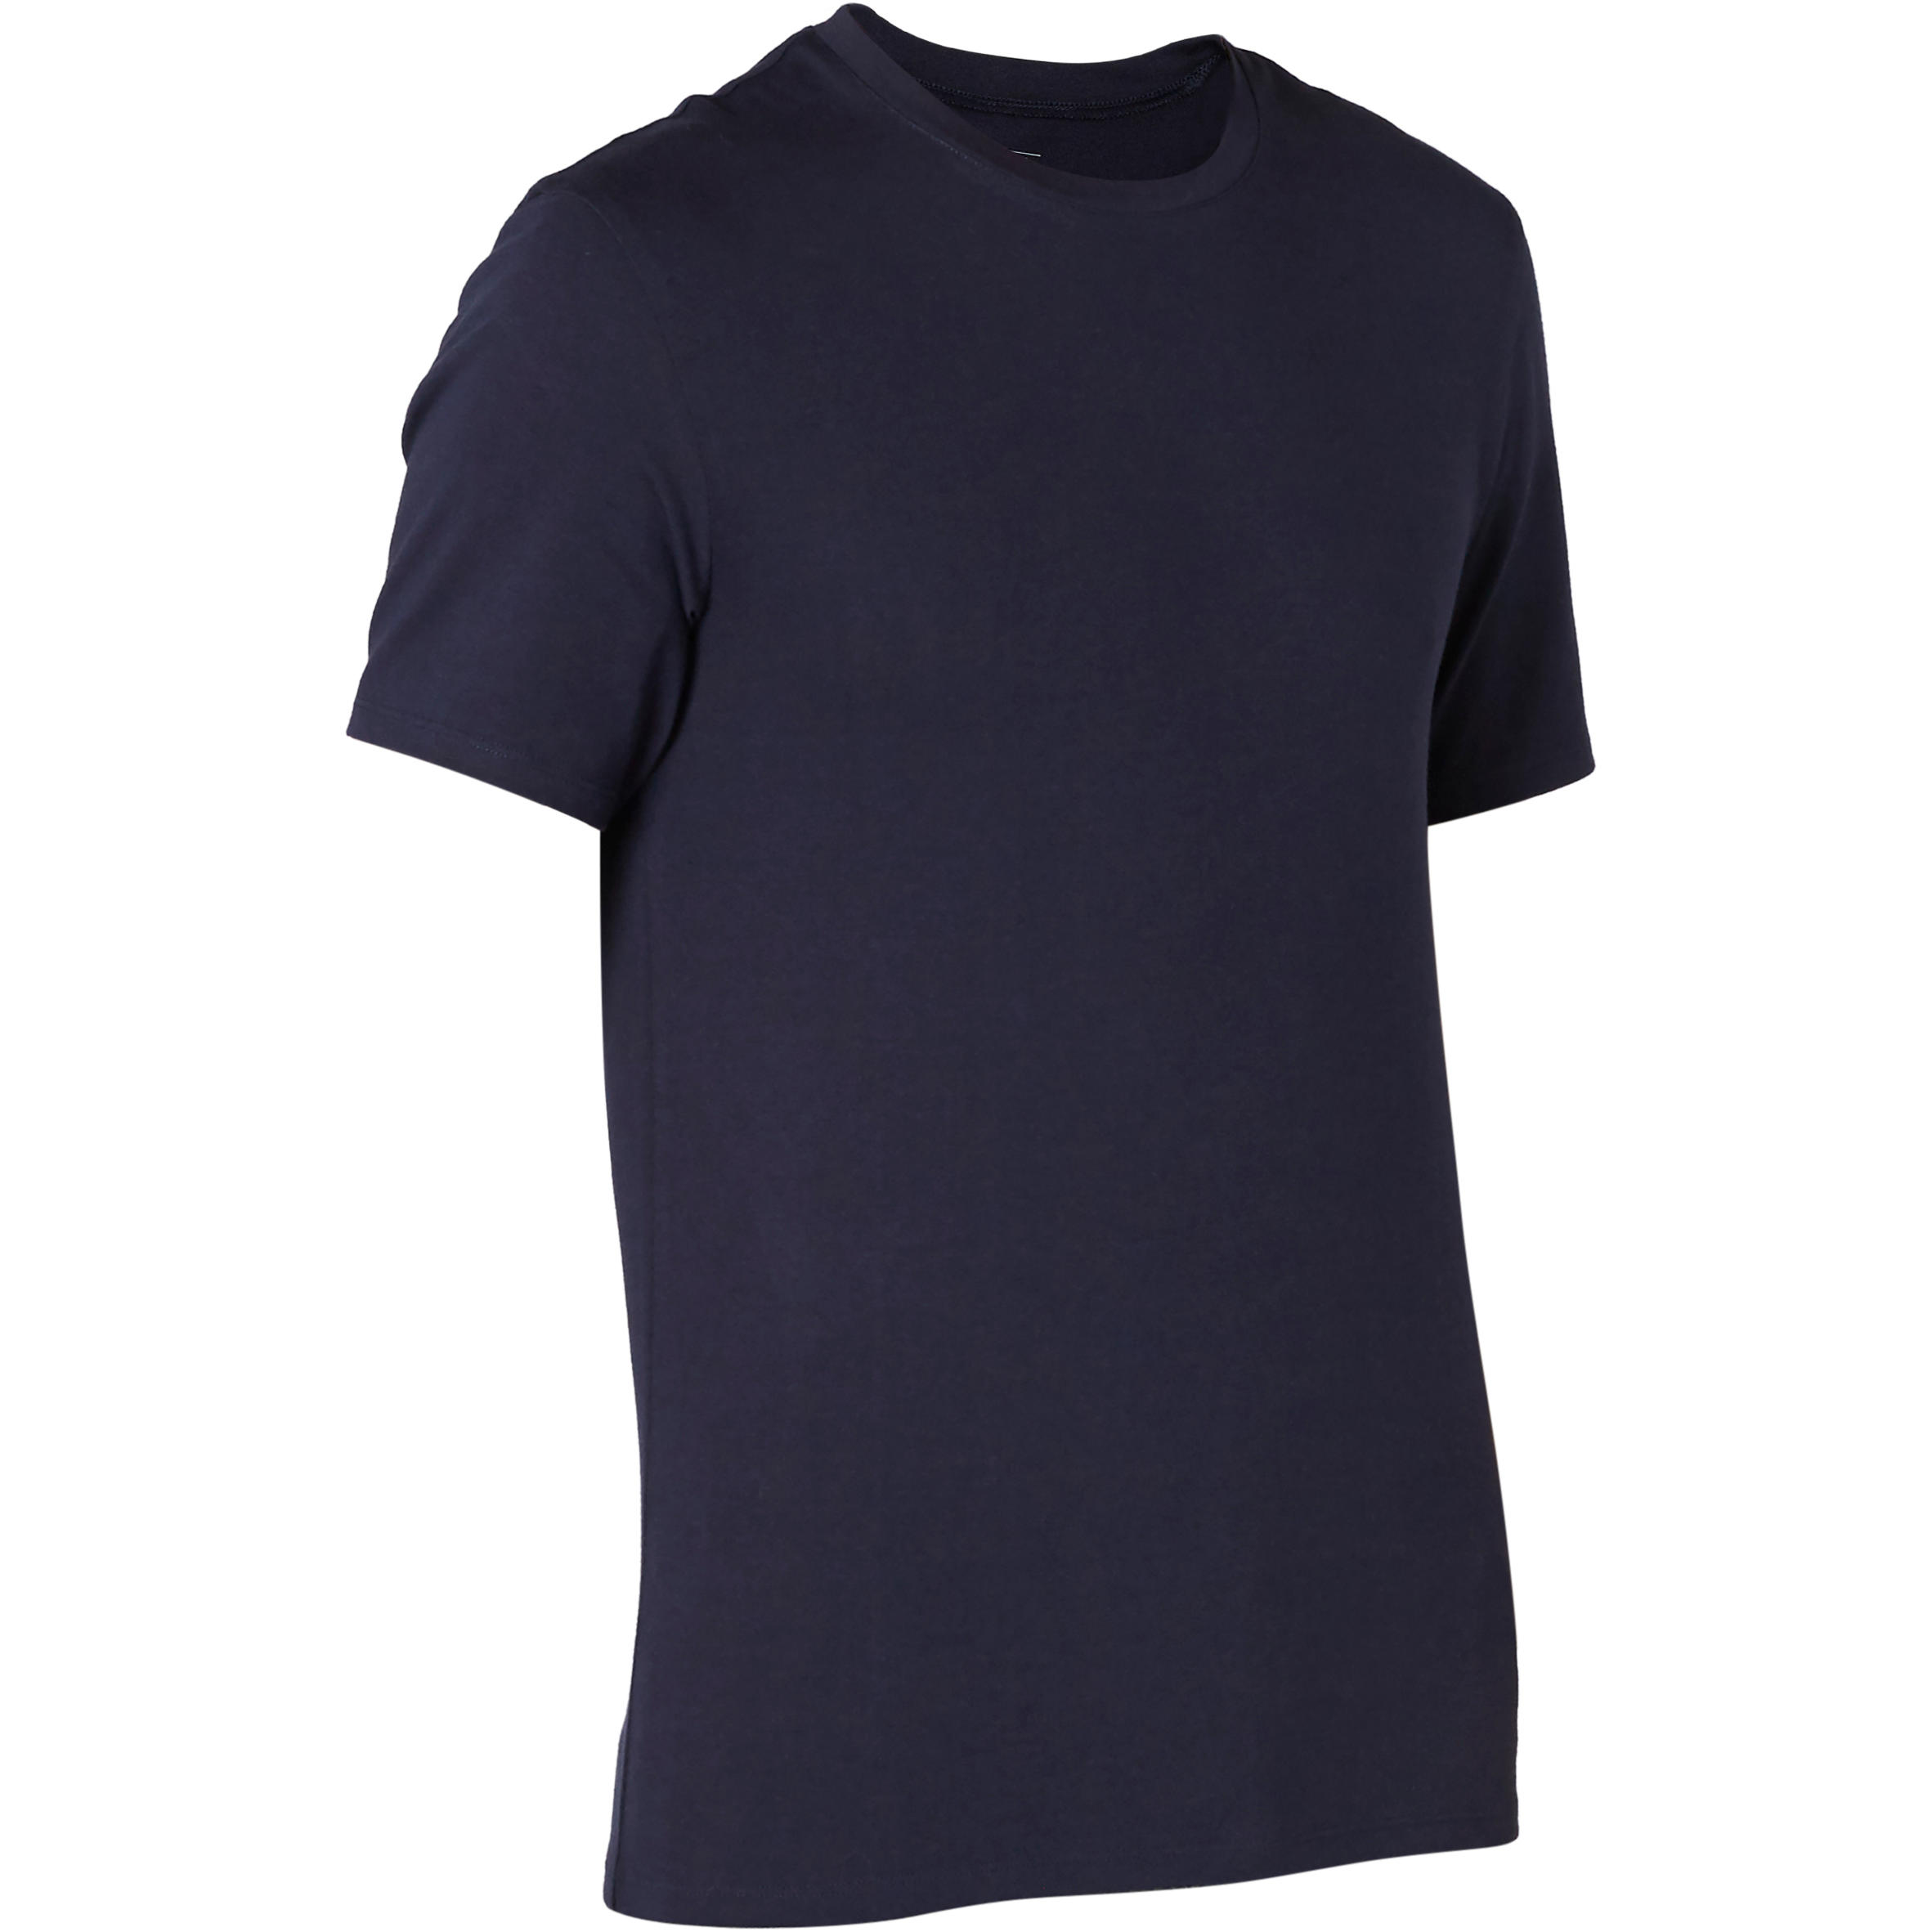 Men's Slim-Fit Fitness T-Shirt 500 - Dark Blue 2/8